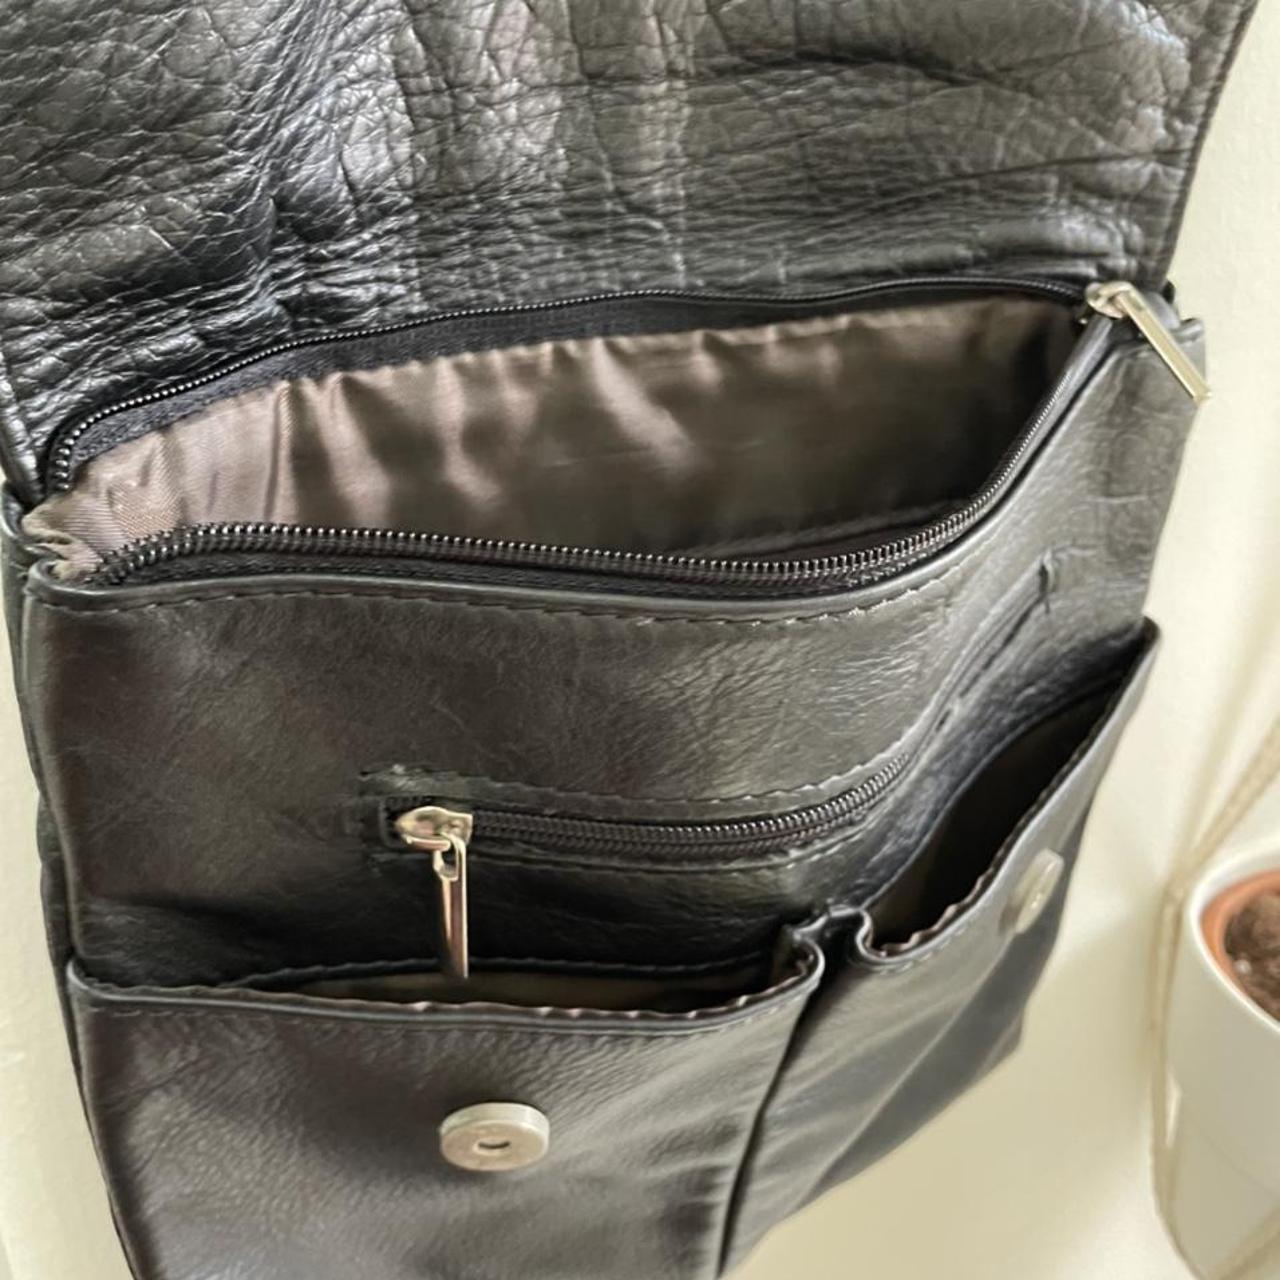 Vintage Italian Leather Bag. Super buttery leather,... - Depop